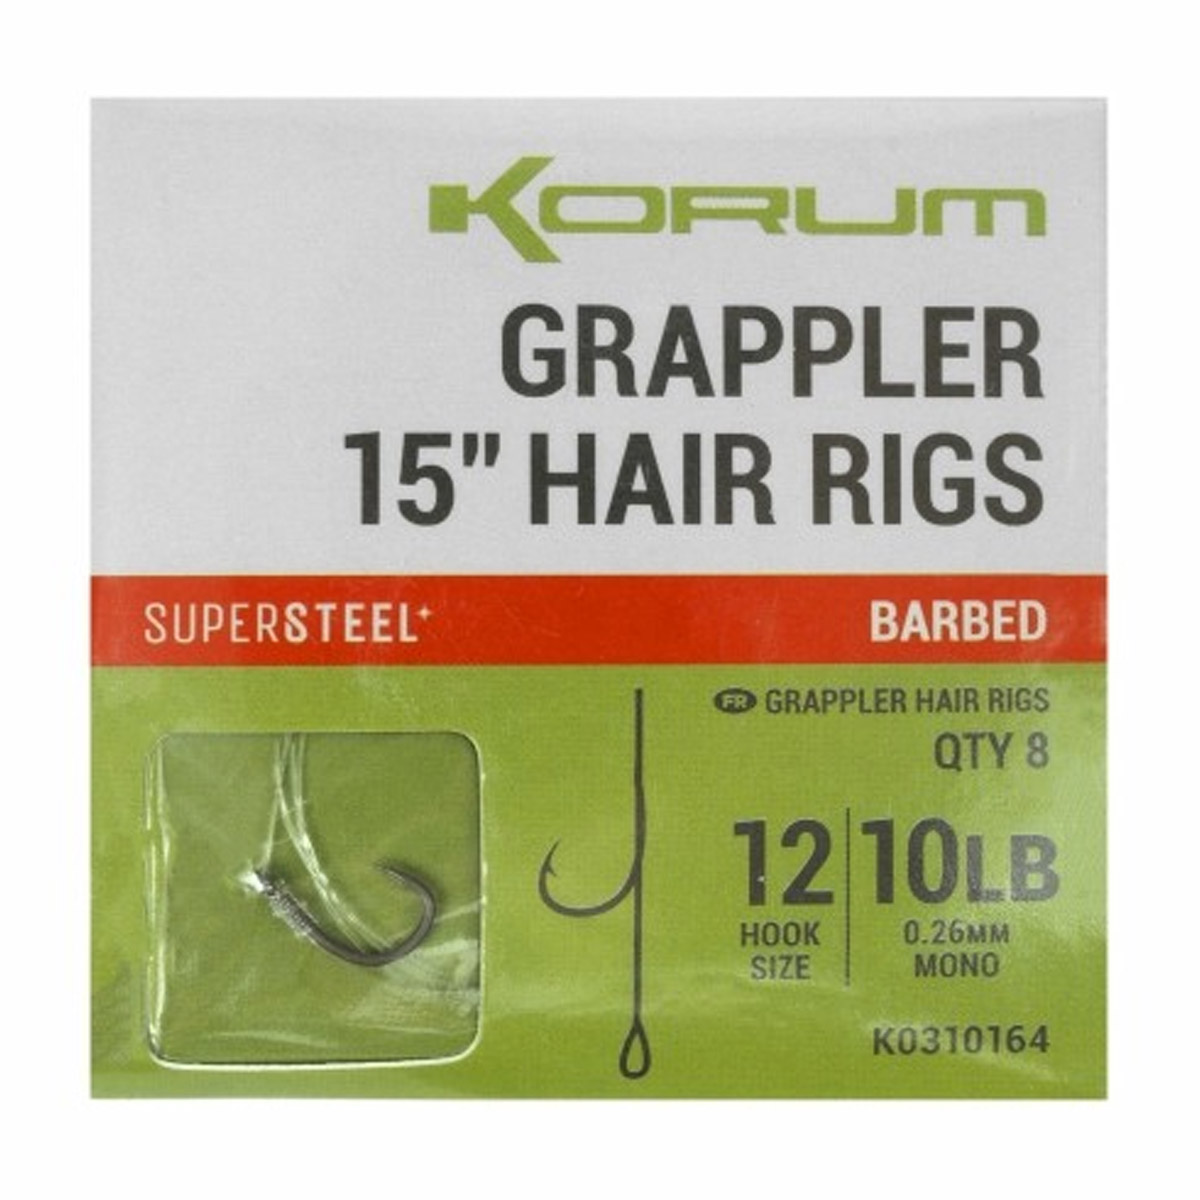 Korum Supersteel Big Fish Grappler Barbed Hair Rigs 15"